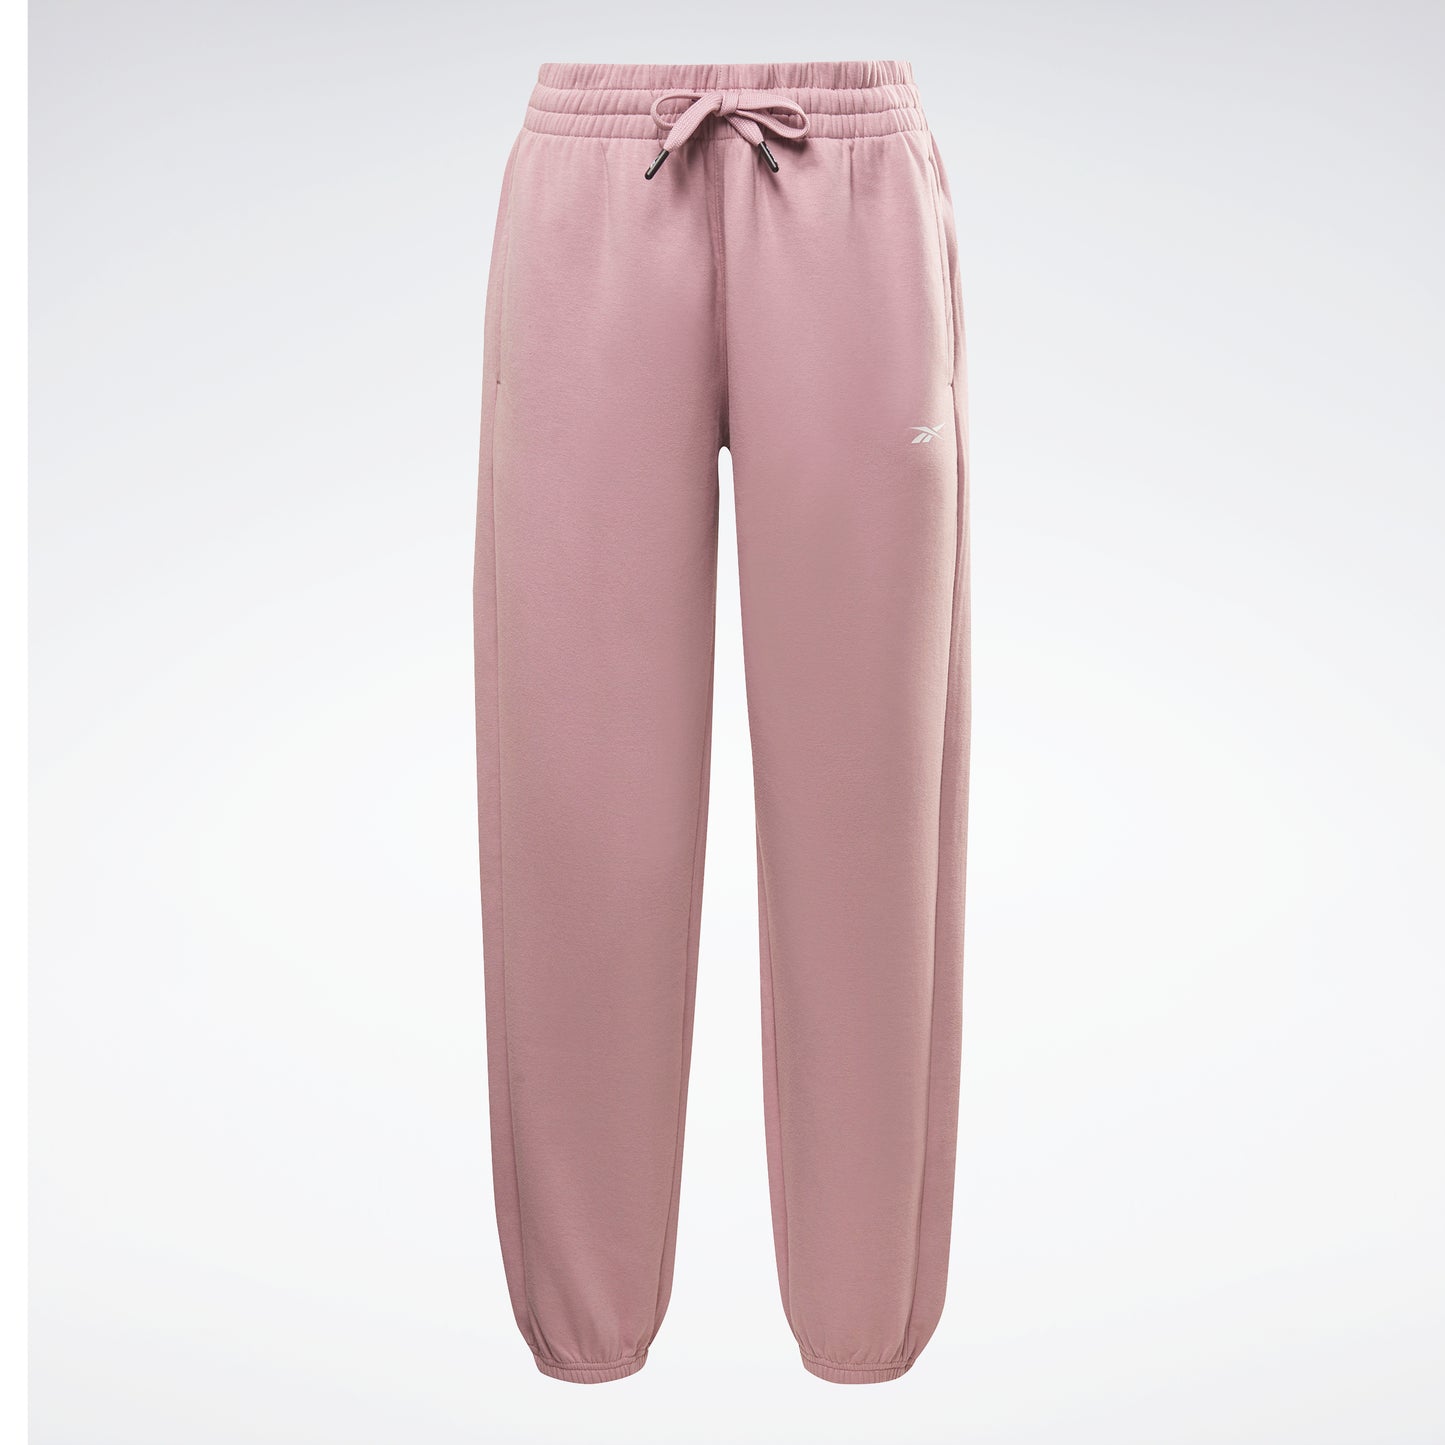 Women's trousers Reebok DreamBlend Cotton Knit - Clothing Running - Running  - Physical maintenance